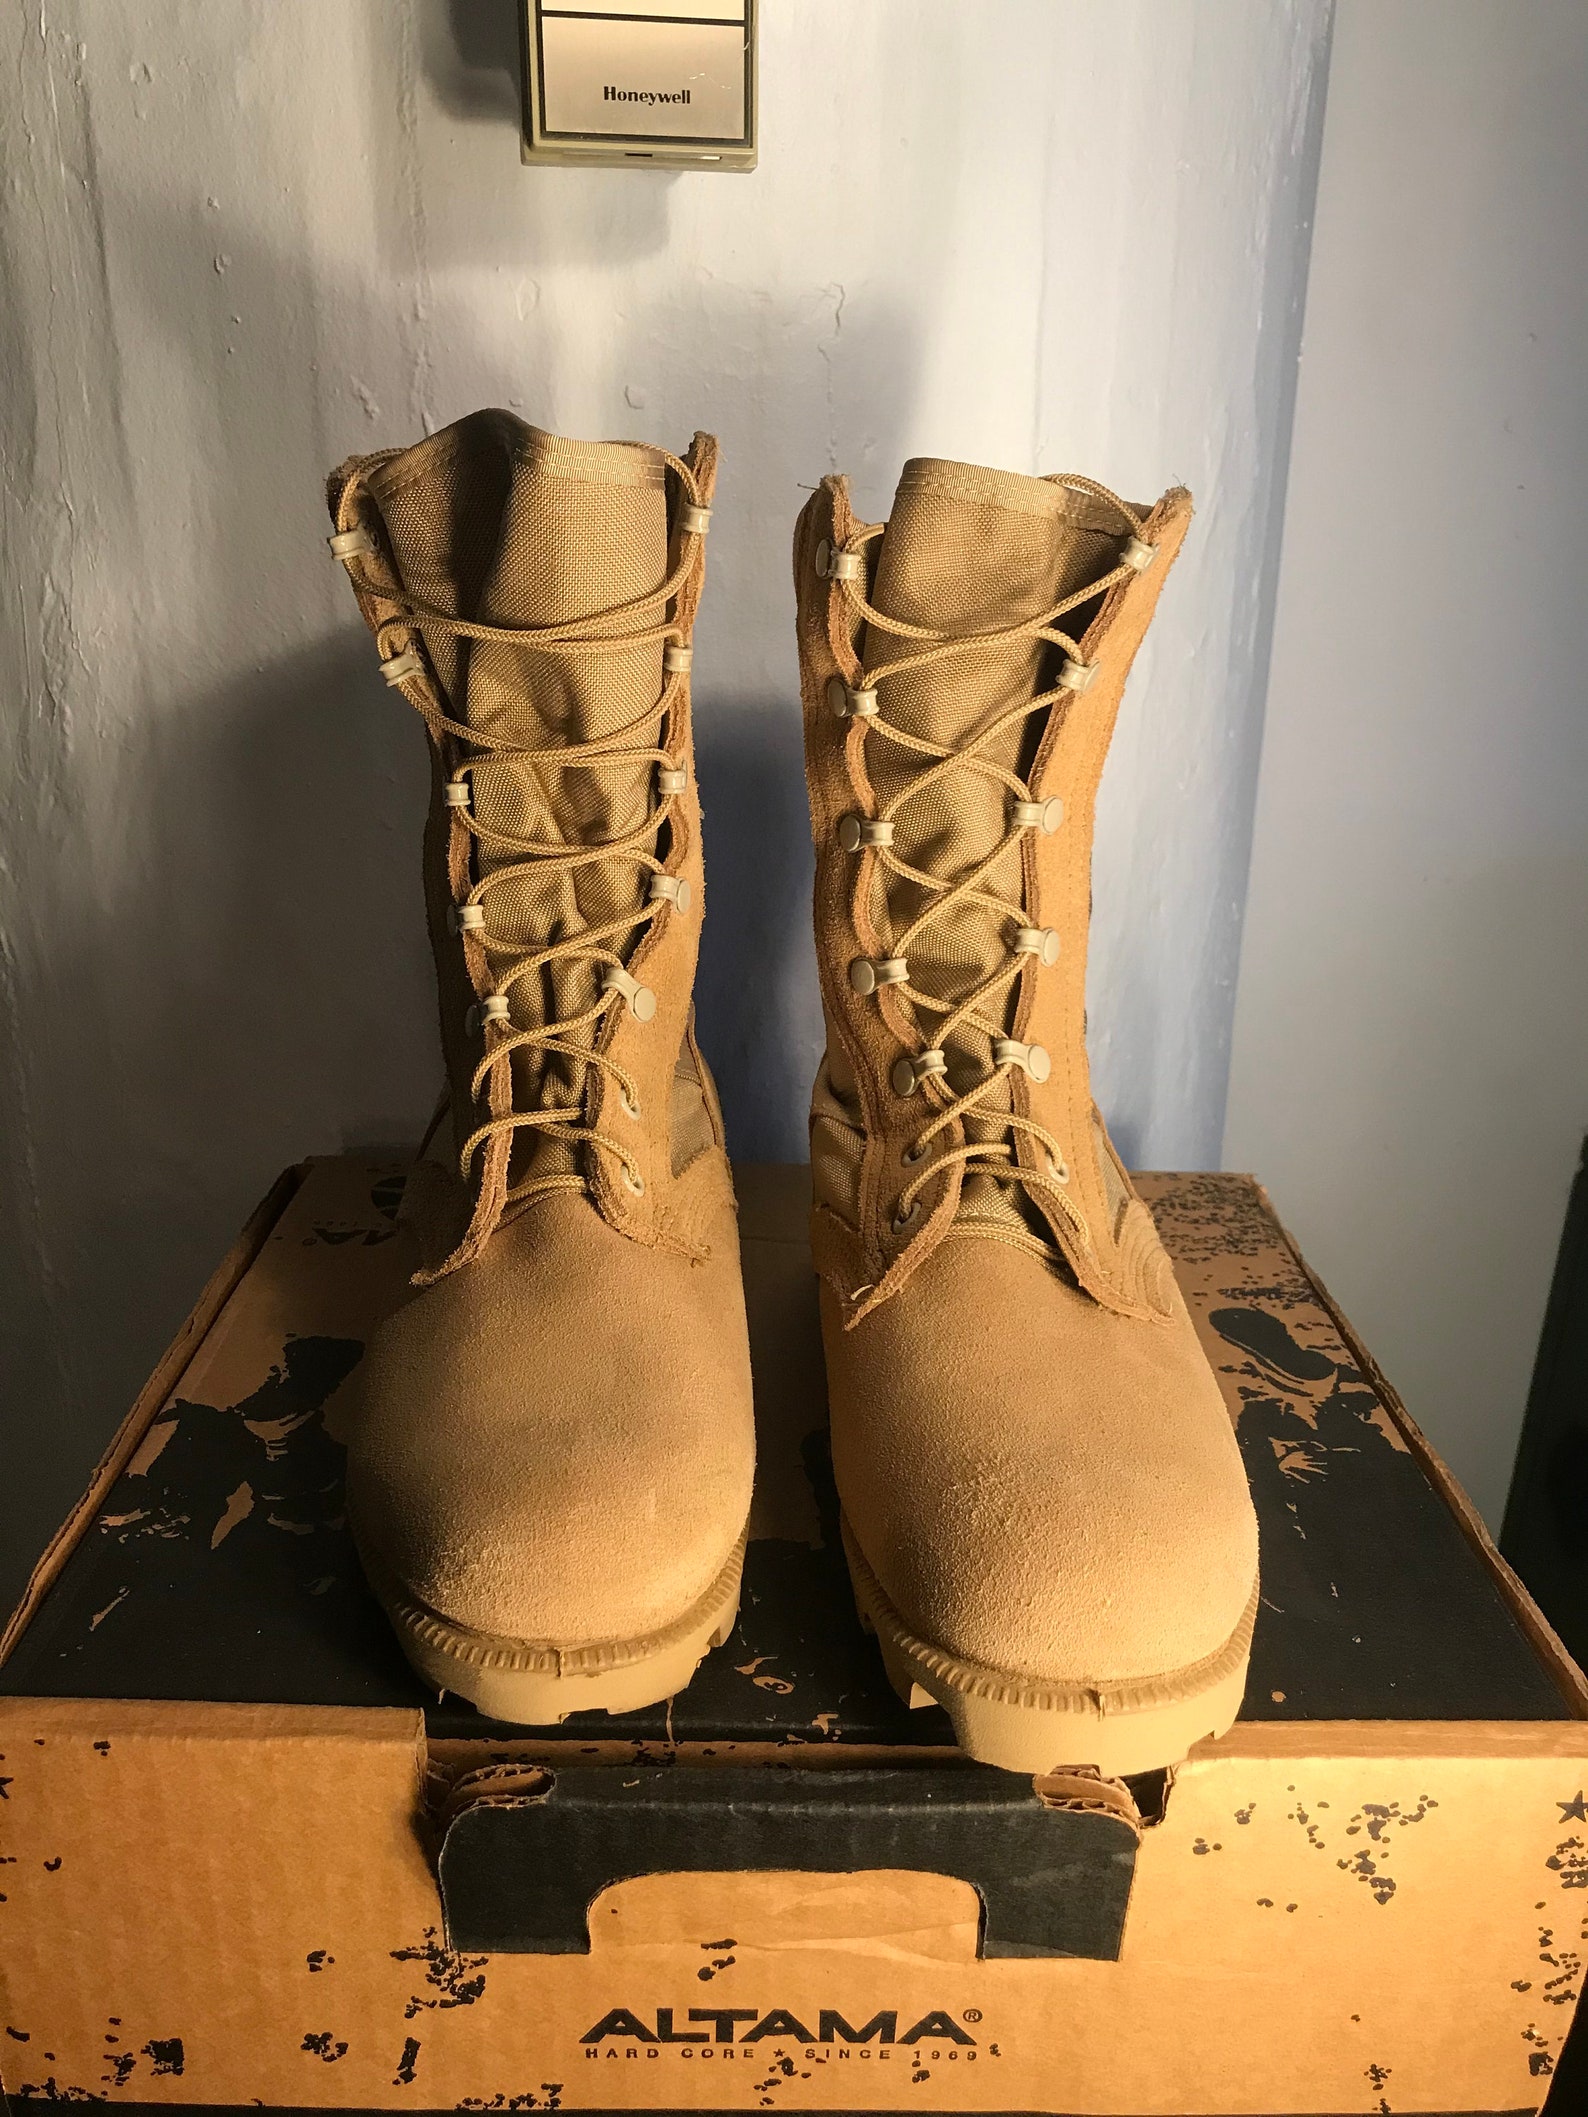 Altama Desert combat boots | Etsy